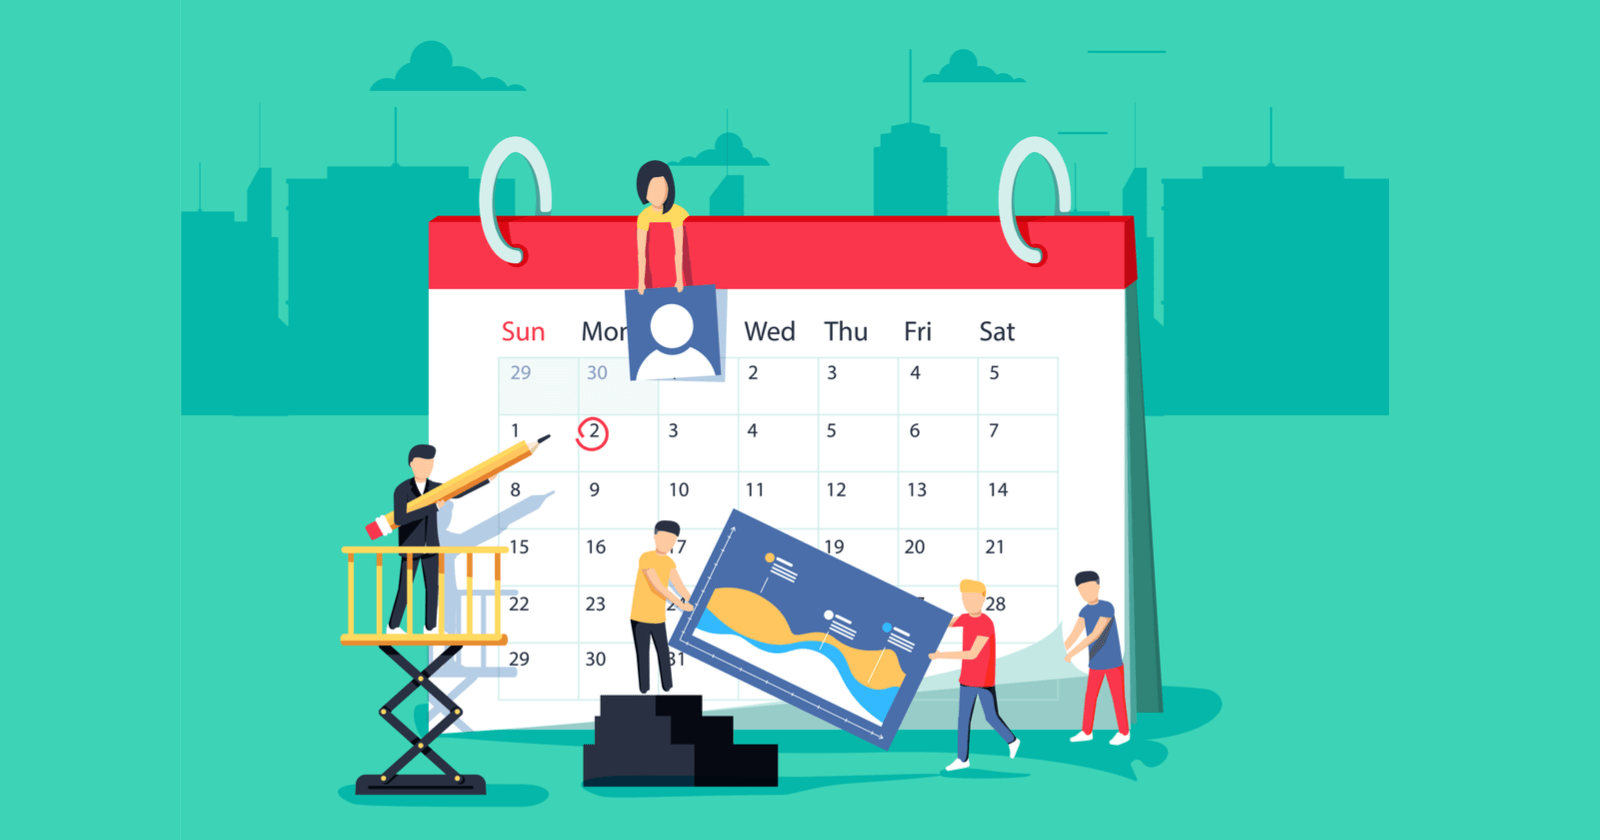 How to Create Your Editorial Calendar for Social Media تقویم محتوا (Content Calendar)؛ برای ساخت یک تقویم خوب، آستین بالا بزنید! بازاریابی محتوا